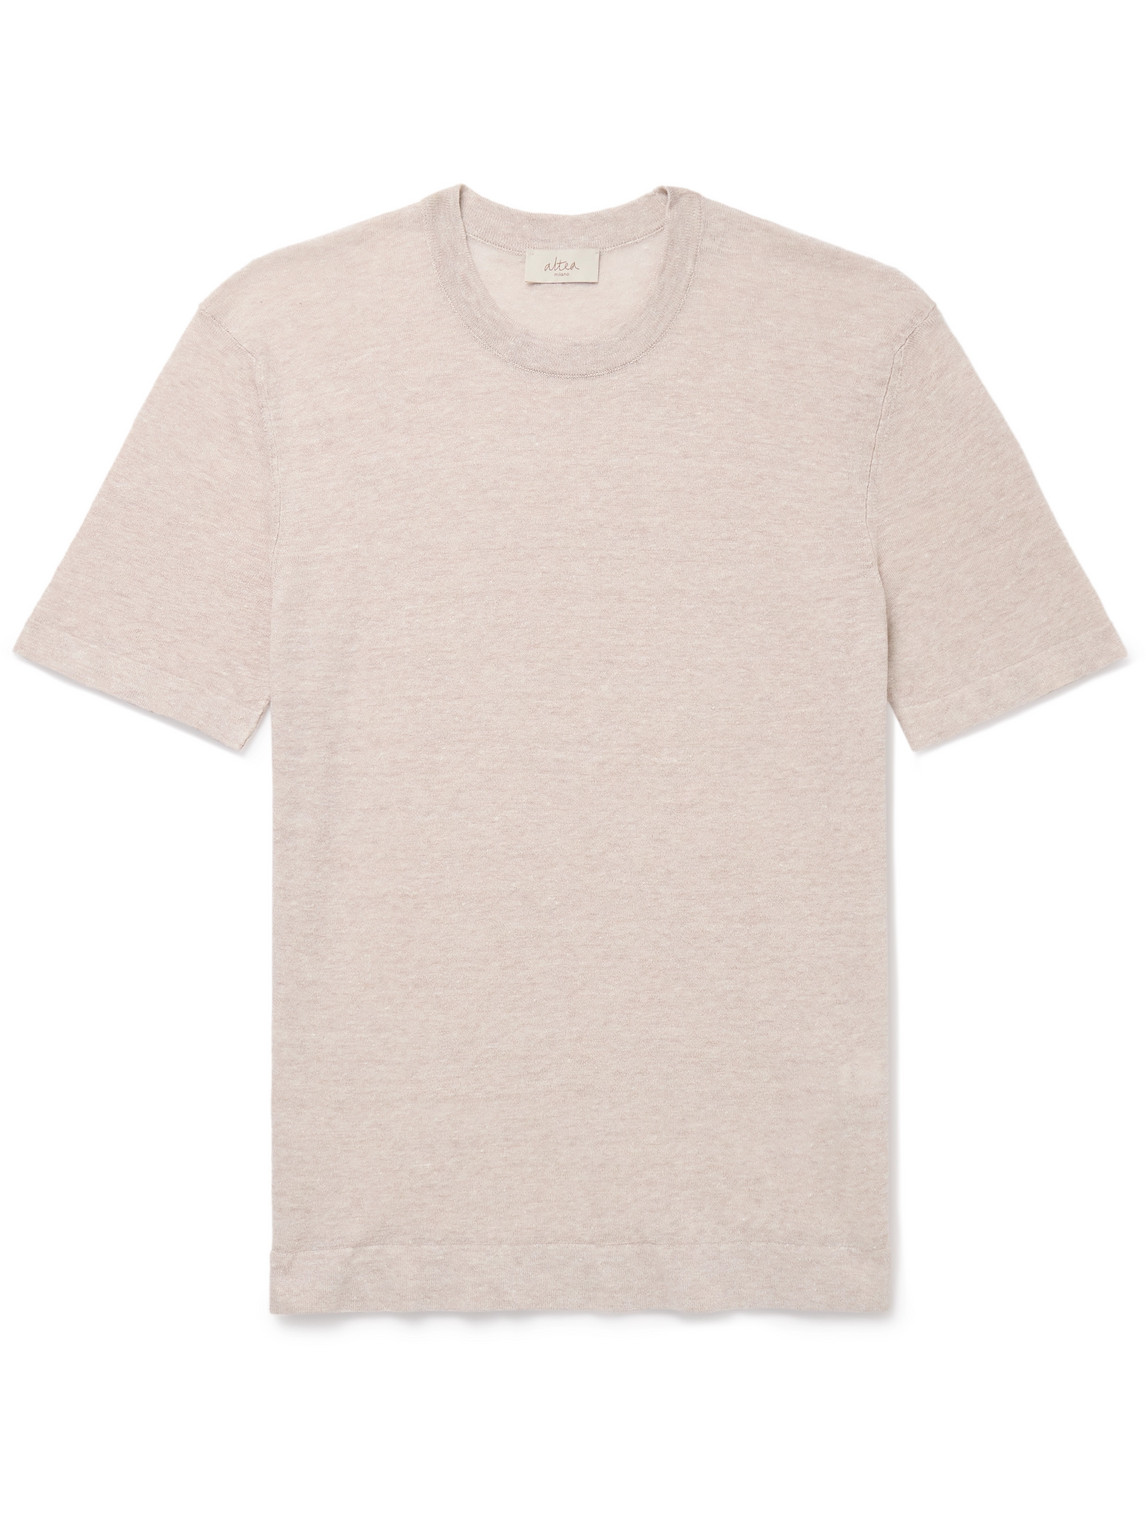 Altea - Linen and Cotton-Blend Jersey T-Shirt - Men - Pink - M von Altea